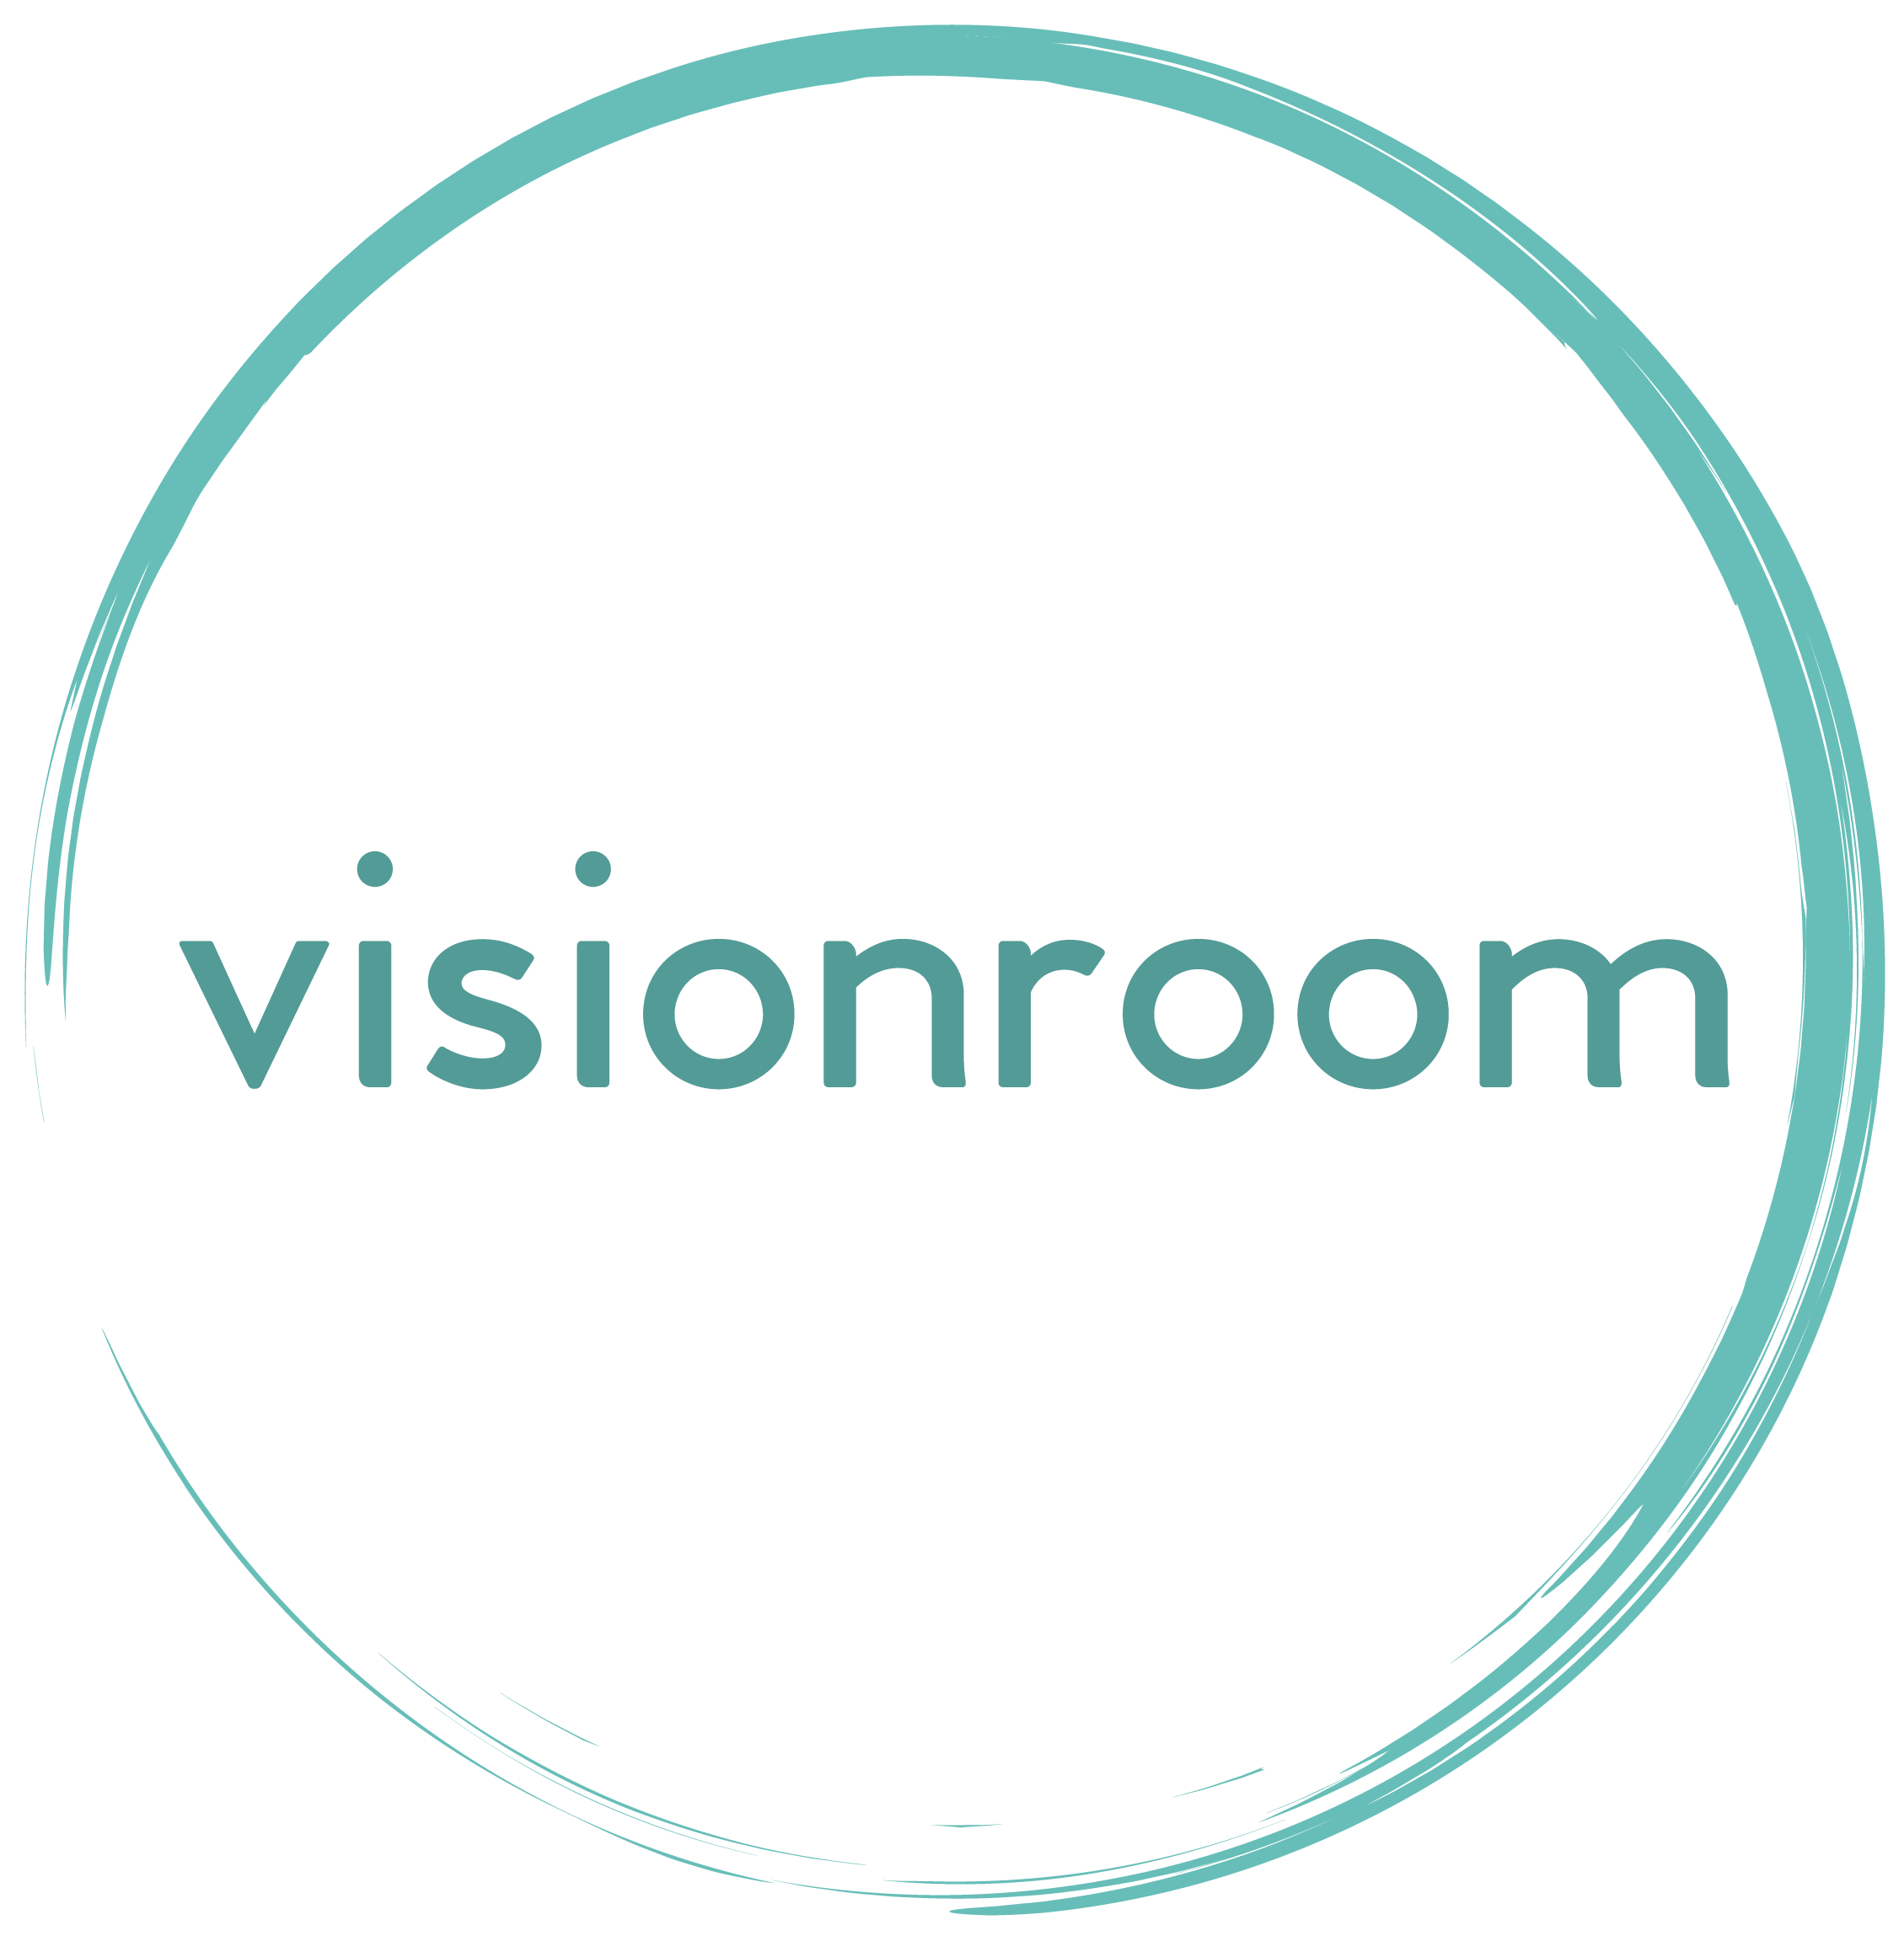 VisionroomDK